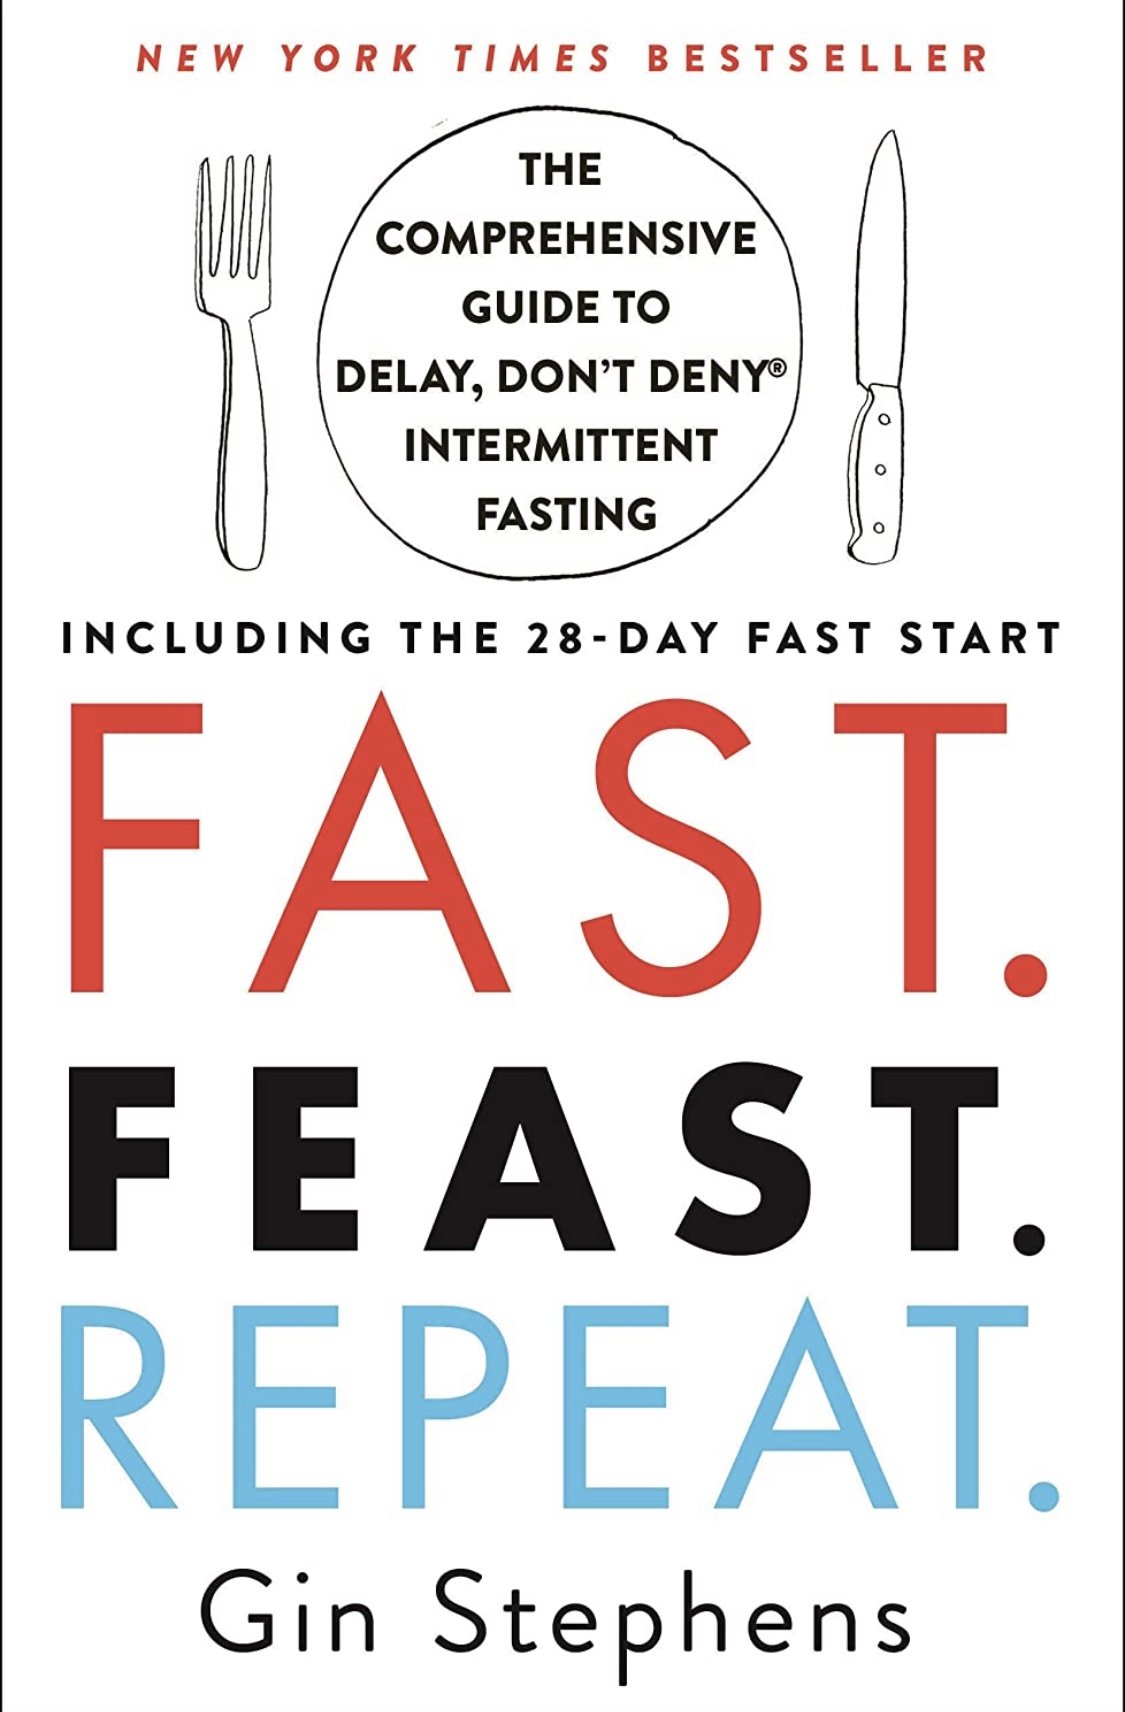 Fast Feast Repeat